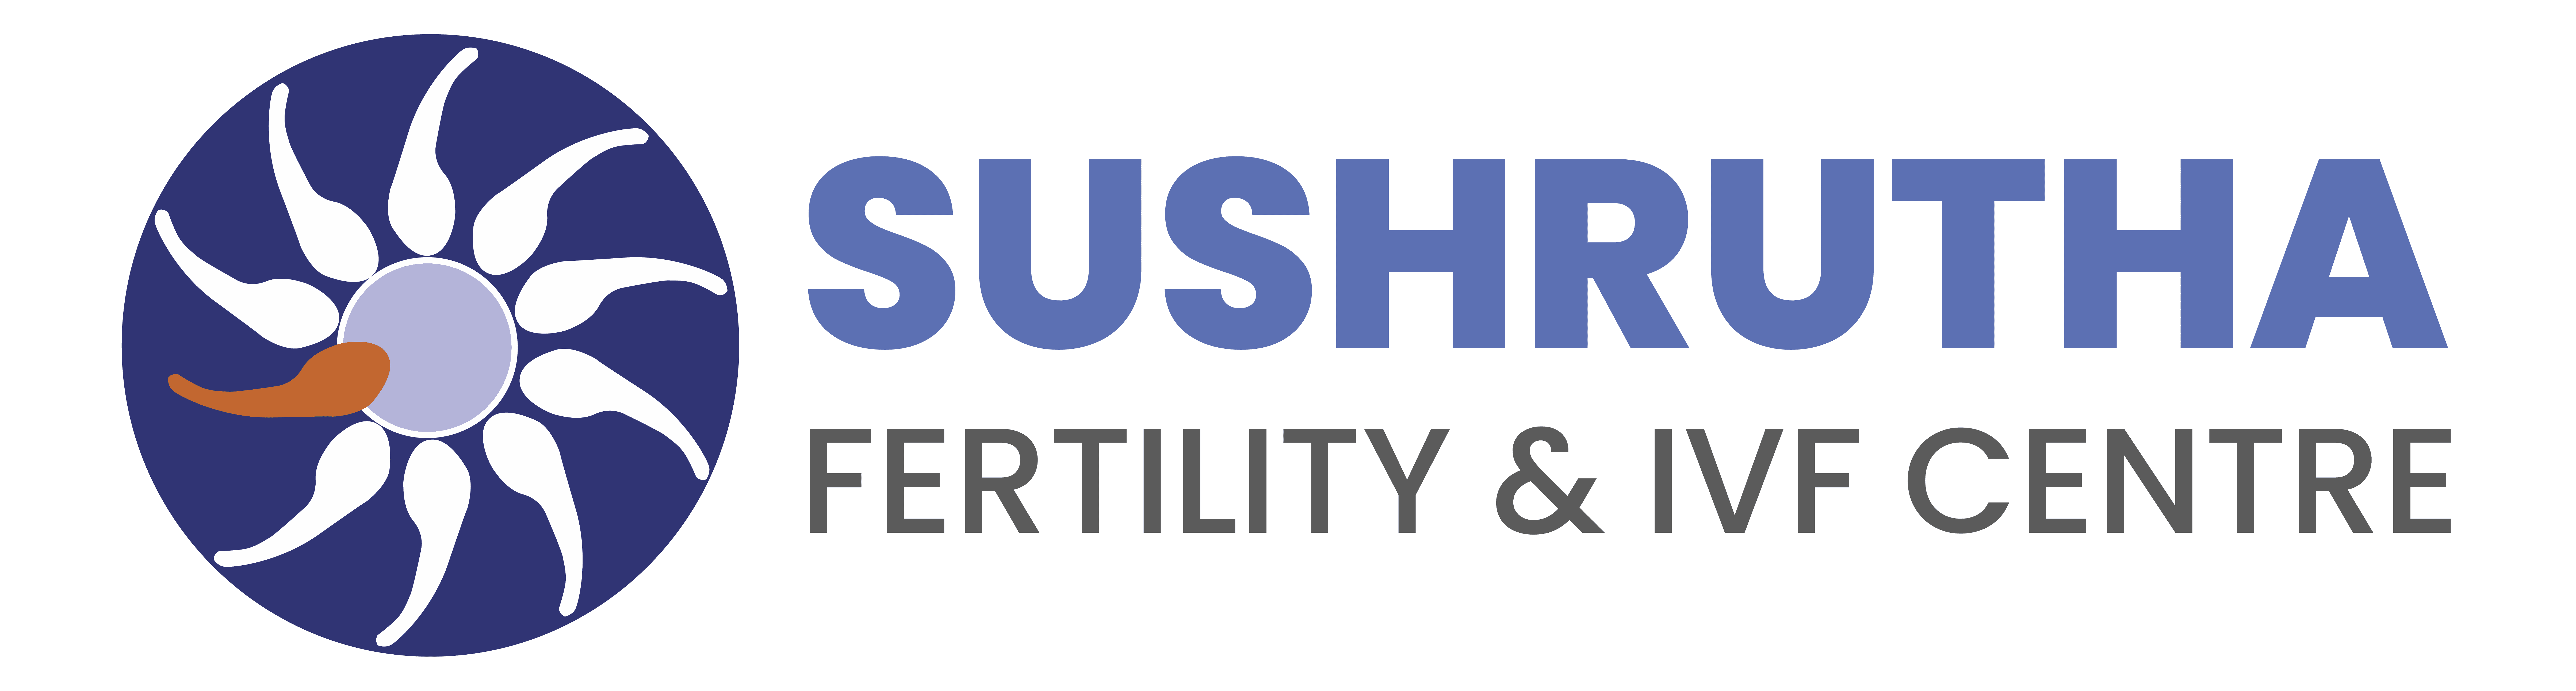 SUSHRUTHA KIDNEY CARE & TEST TUBE BABY CENTRE